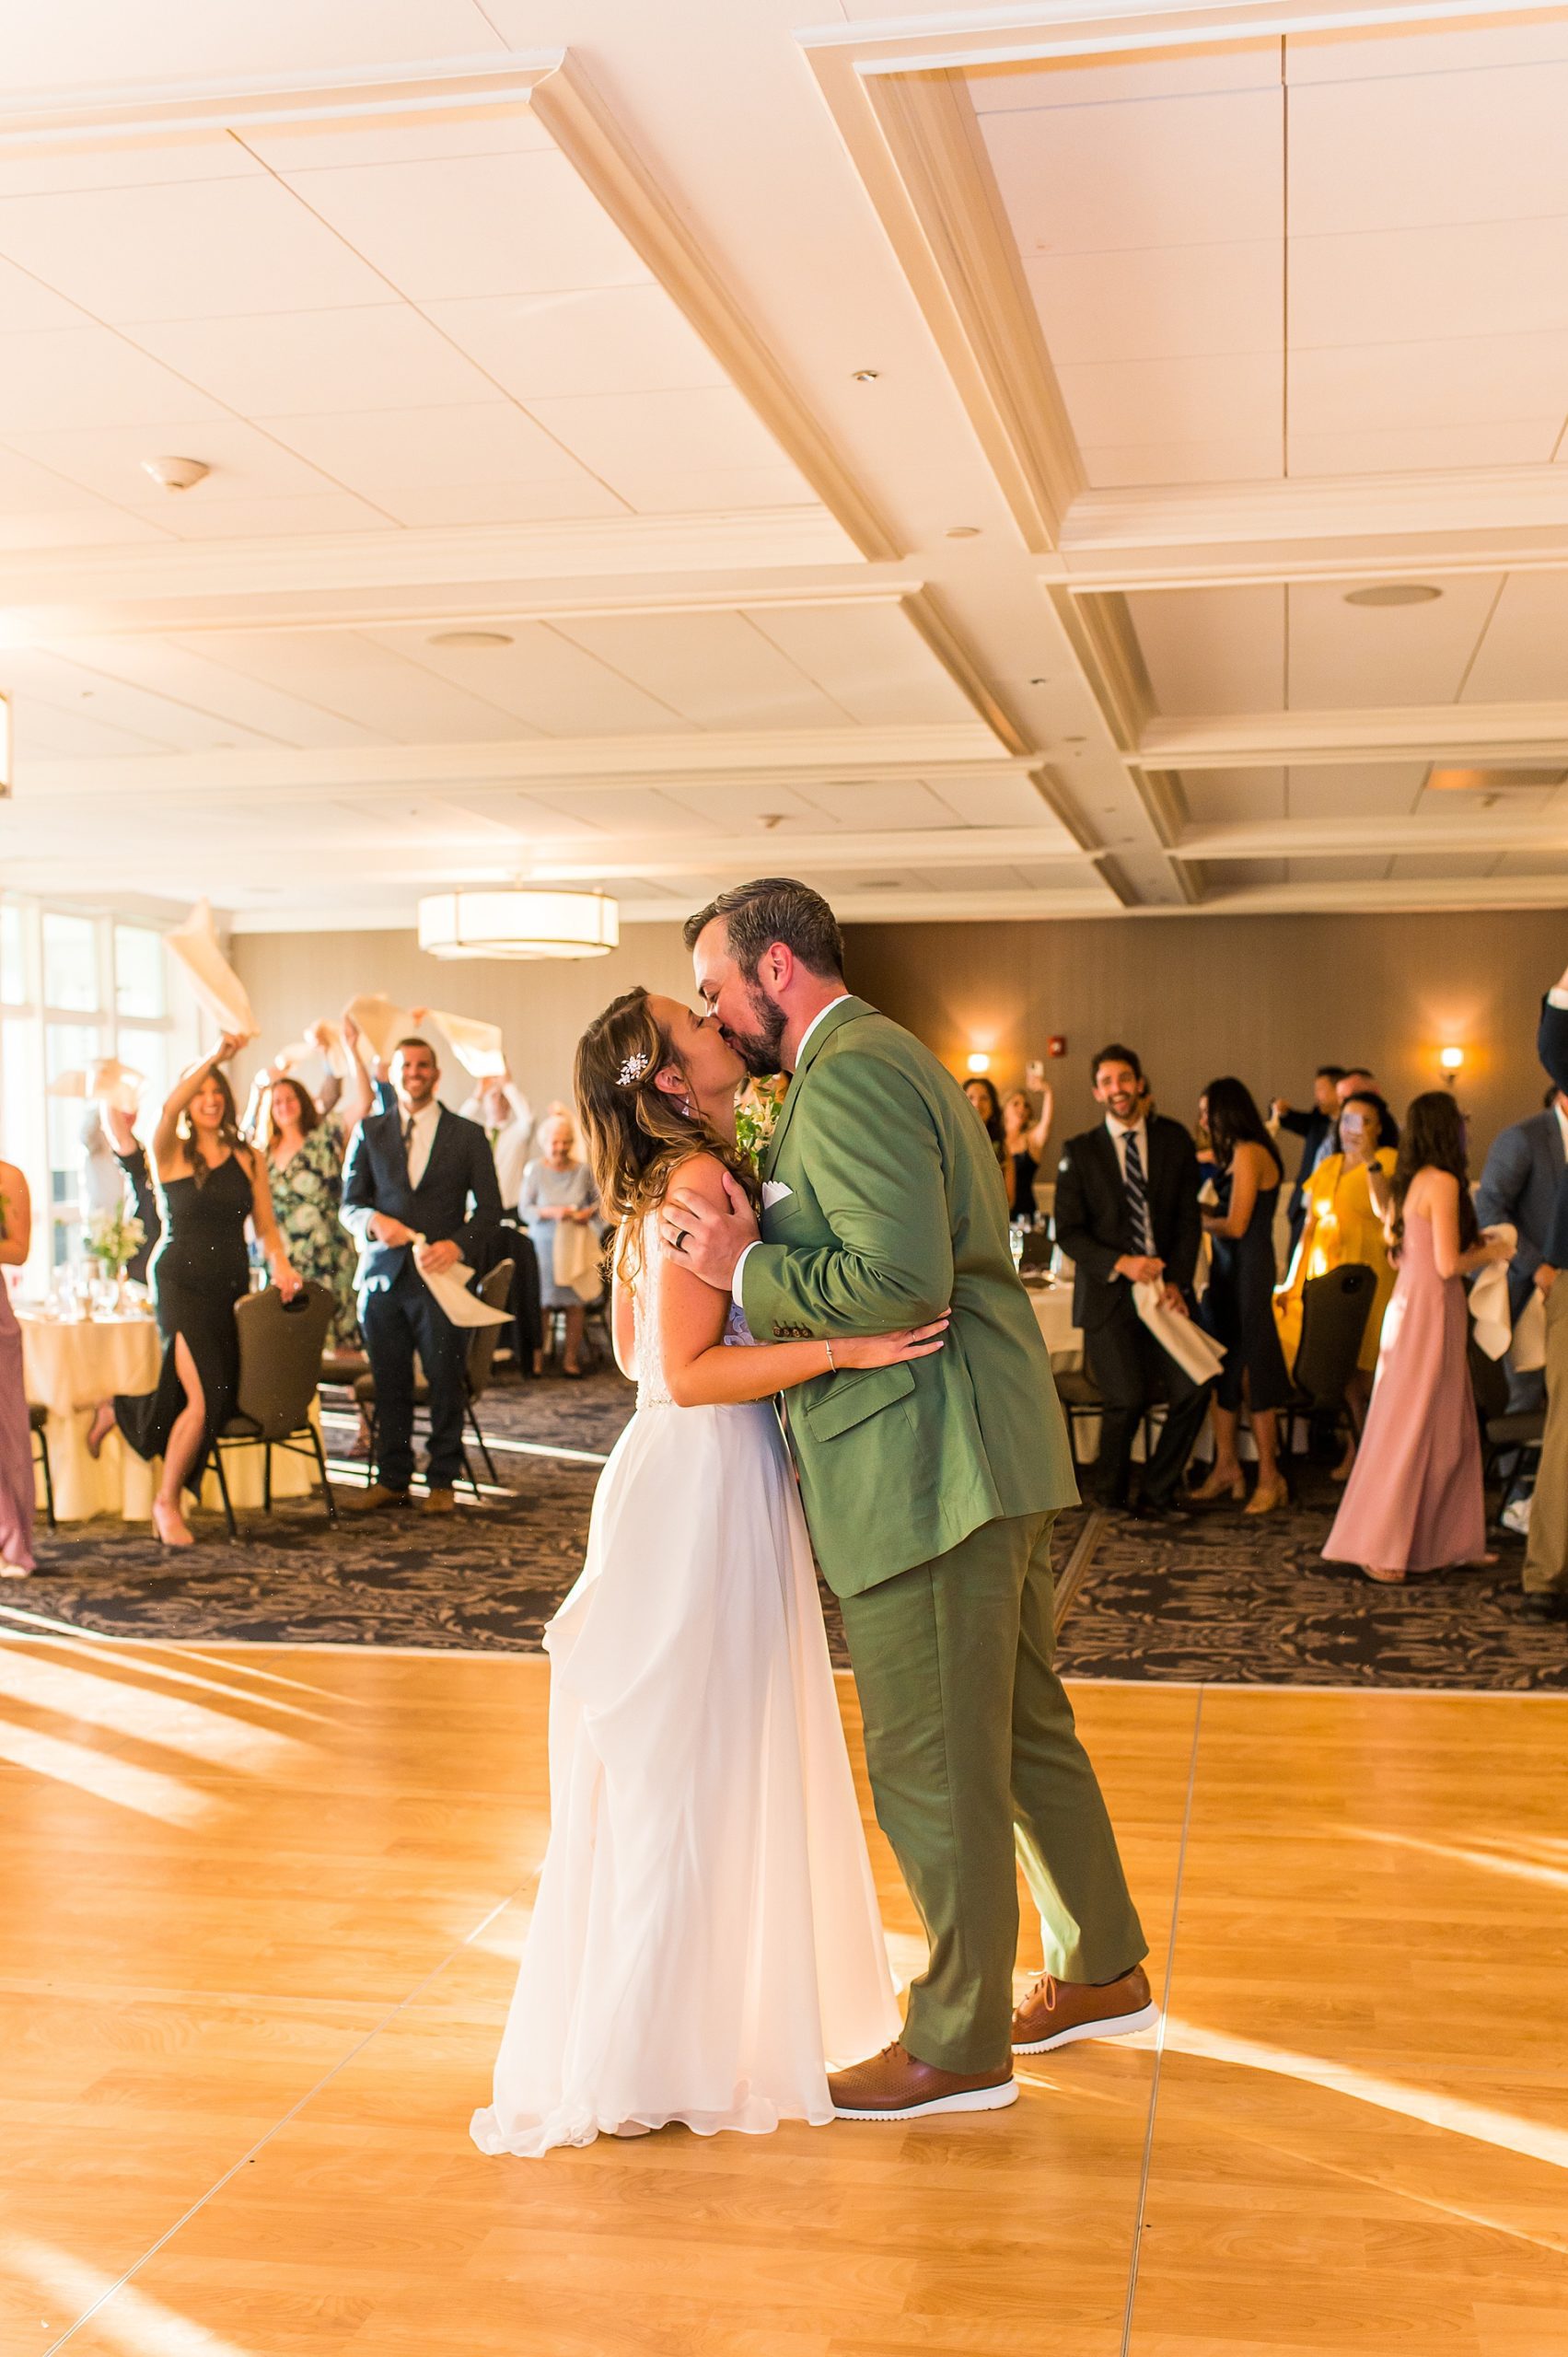 couple kiss on the dance floor at wedding reception